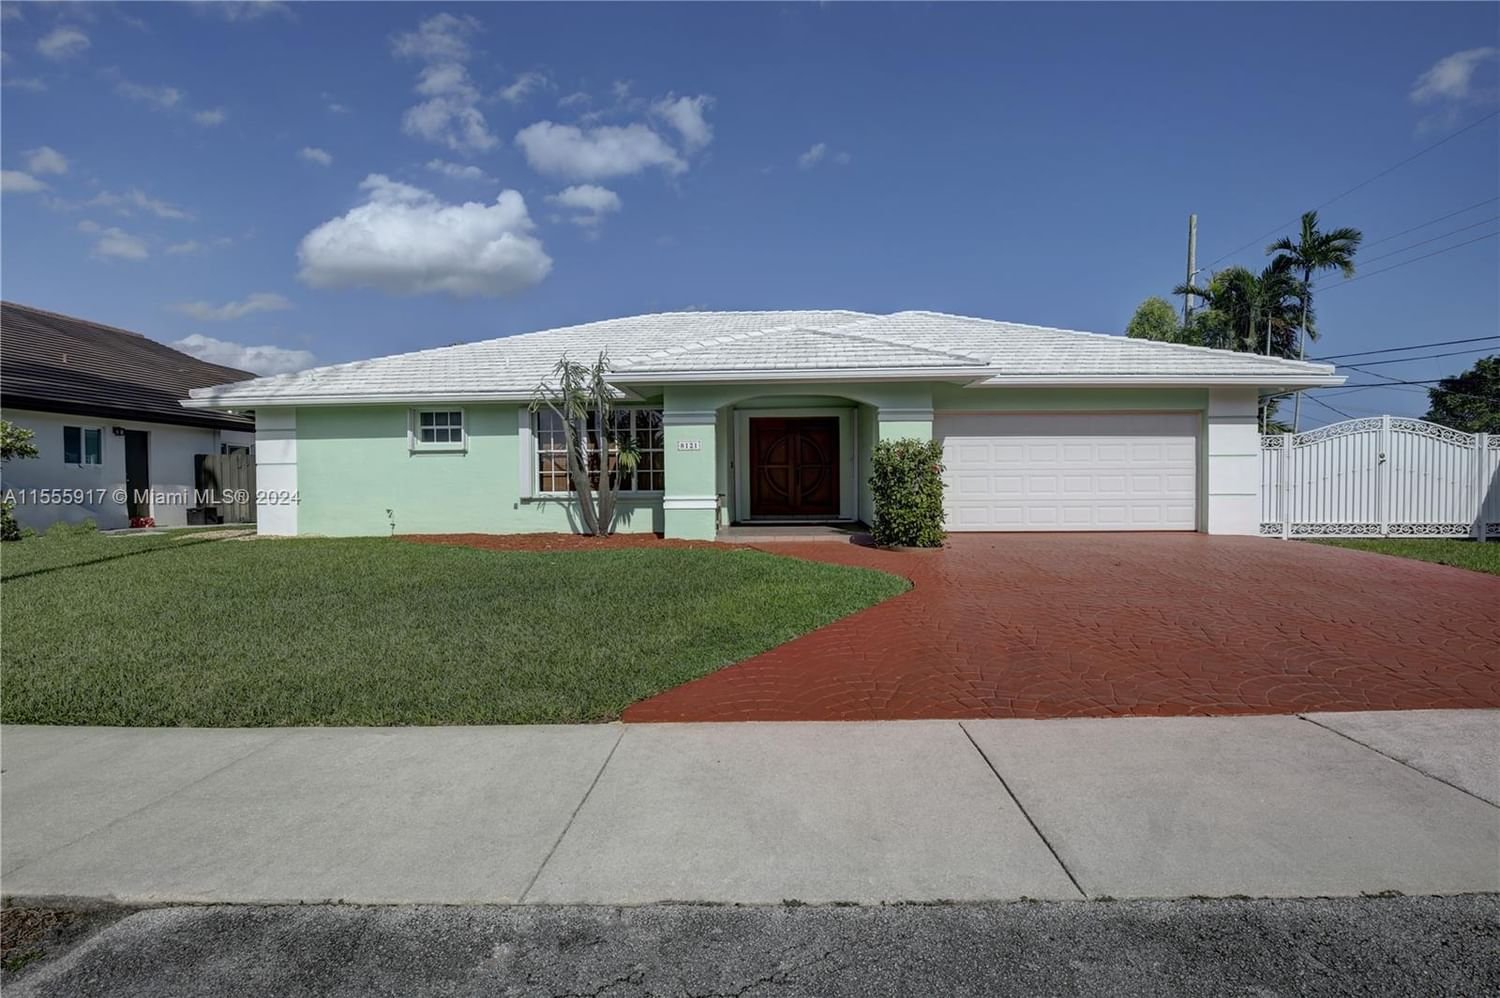 Real estate property located at 8121 89th Ave, Miami-Dade County, HIBISCUS ESTATES, Miami, FL